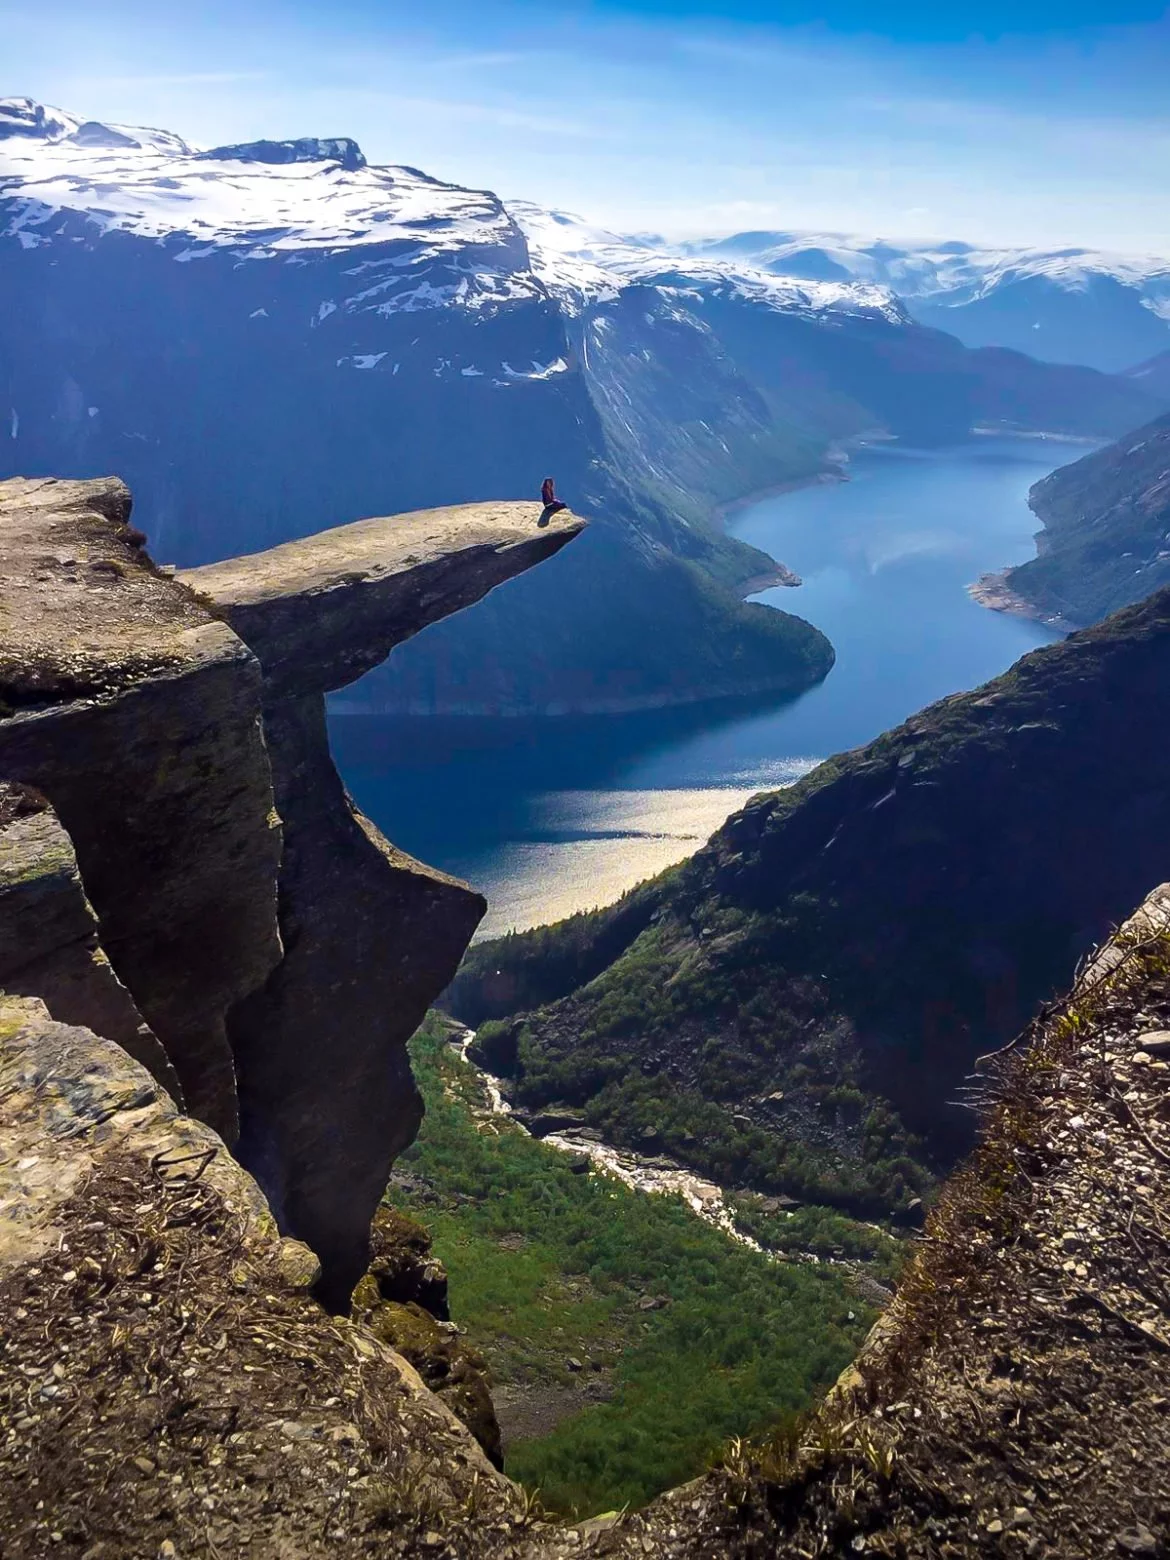 Hiking Trolltunga in Norway - The Ultimate GuideHiking Trolltunga in Norway - The Ultimate Guide 2023